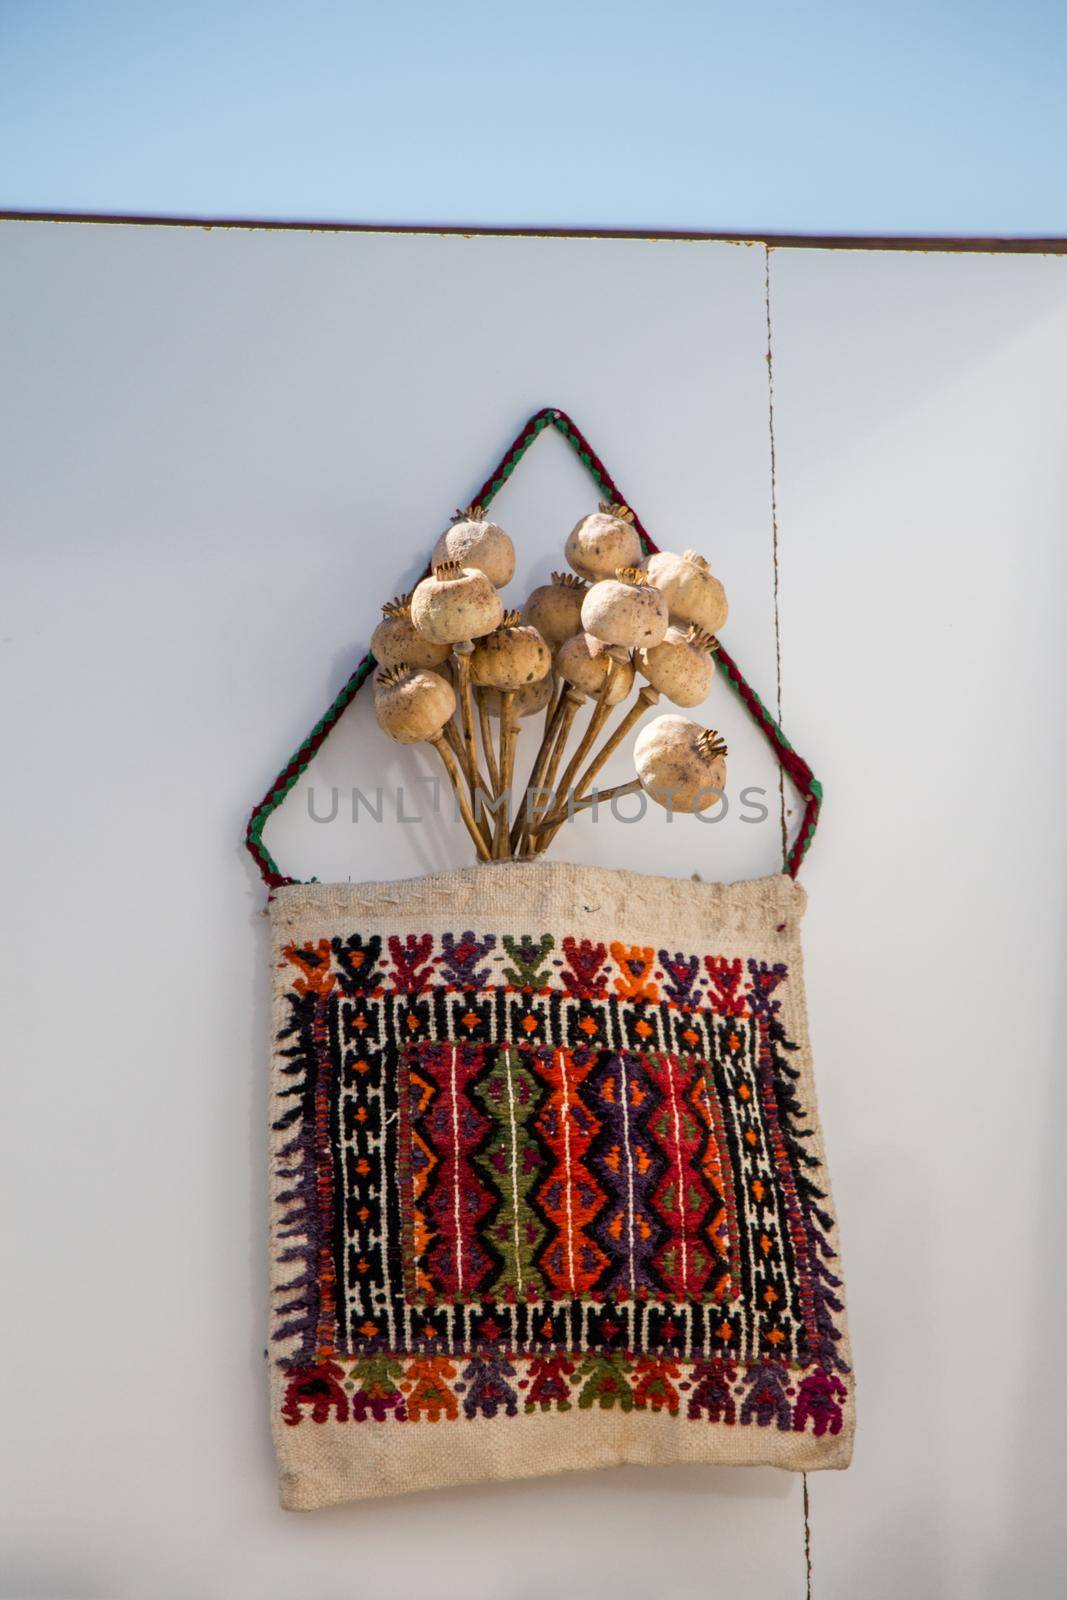 Traditional turkish handmade bag as gift items by berkay